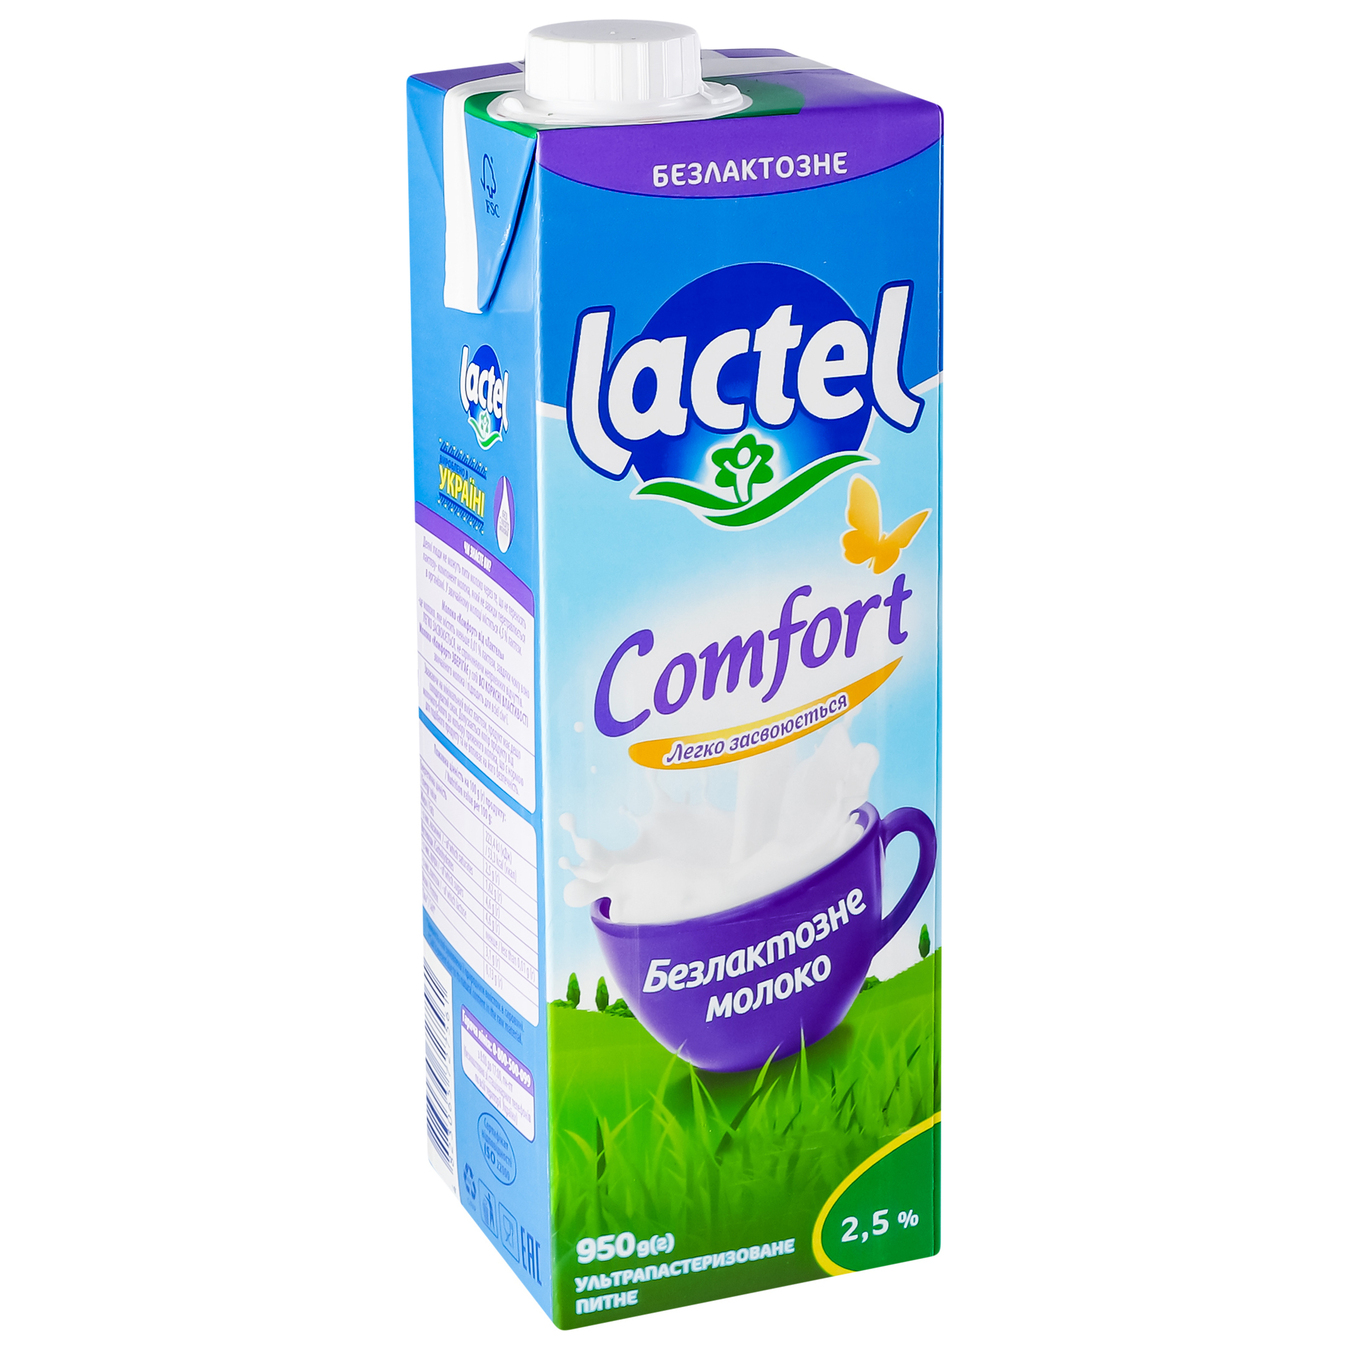 Lactel lactose-free ultra-pasteurized milk 2.5% 950g 5